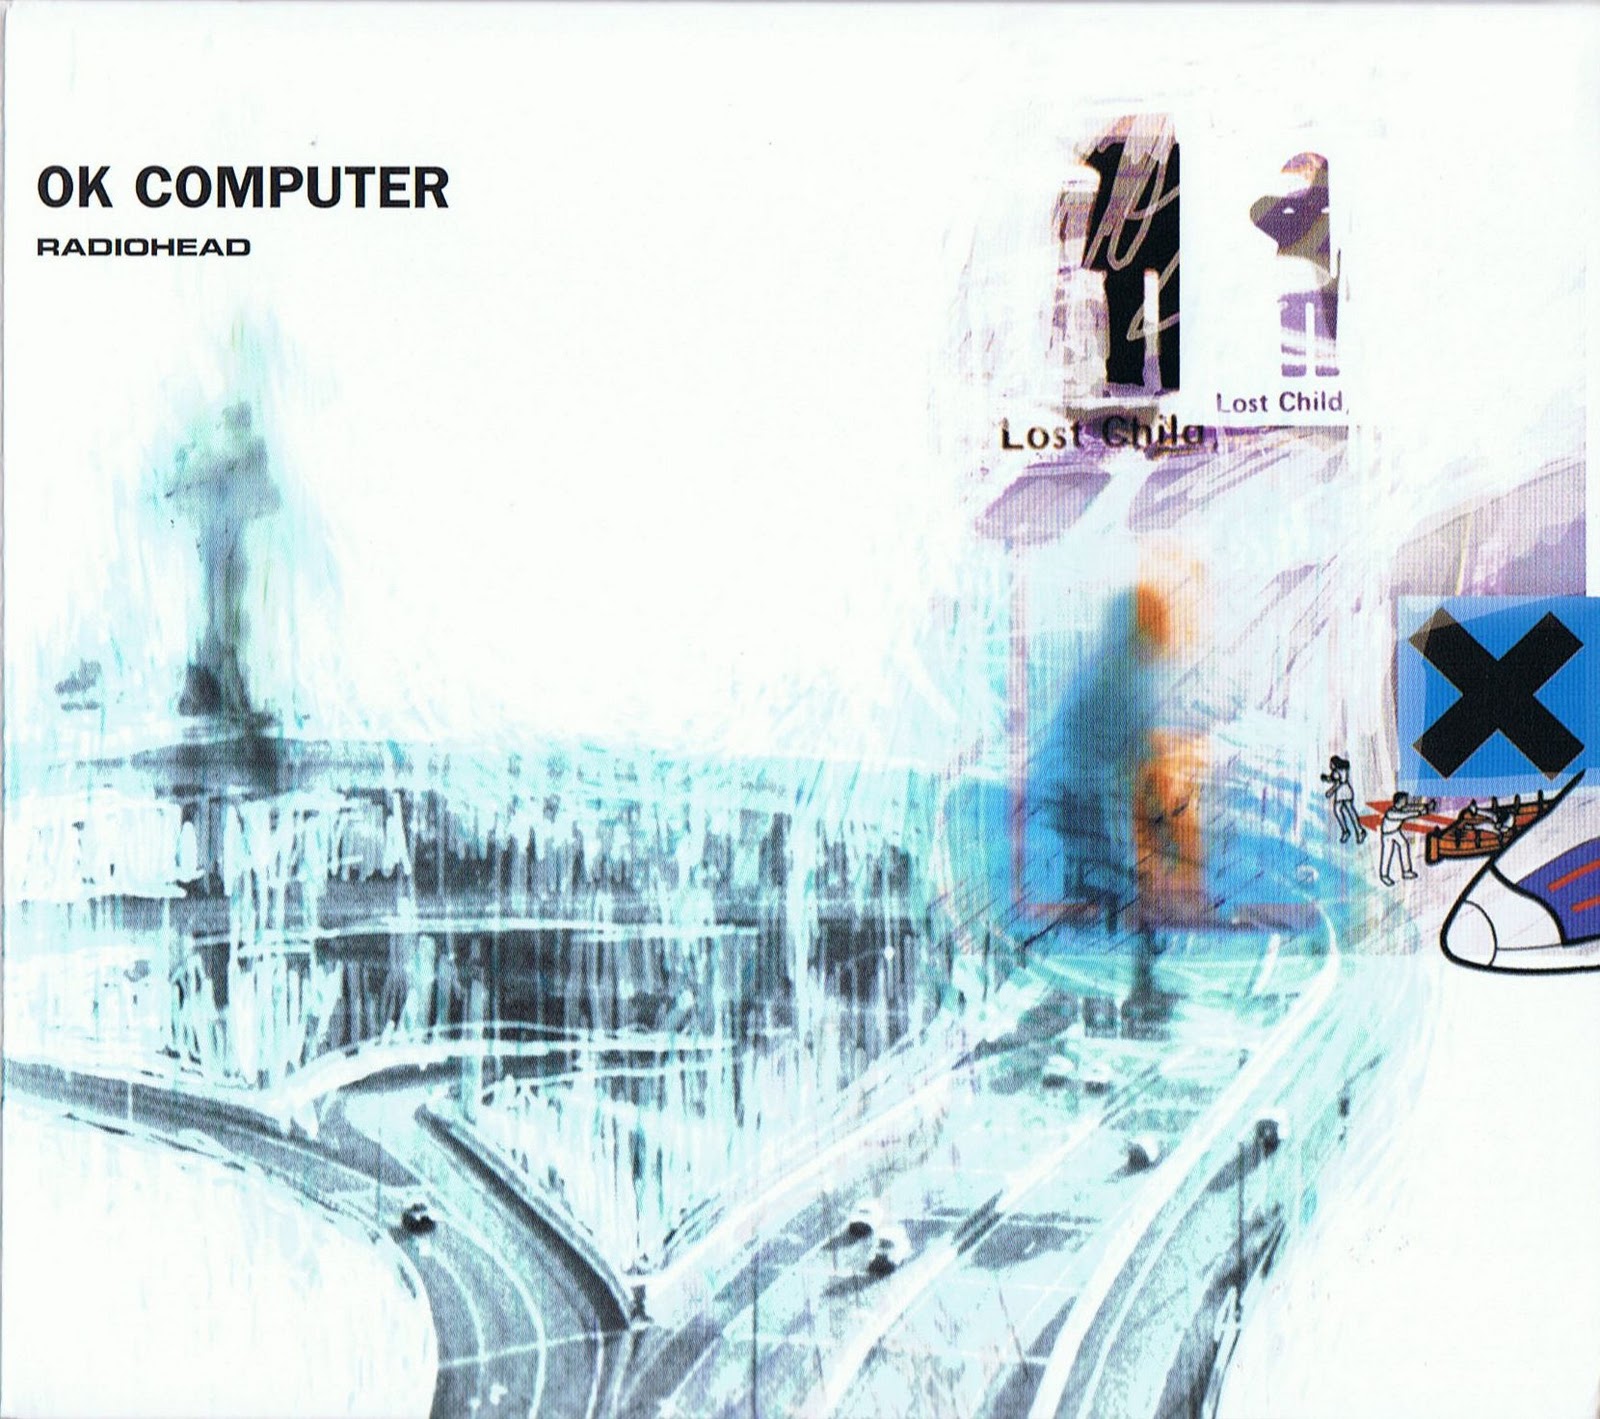 Album Art for OK COMPUTER by Radiohead